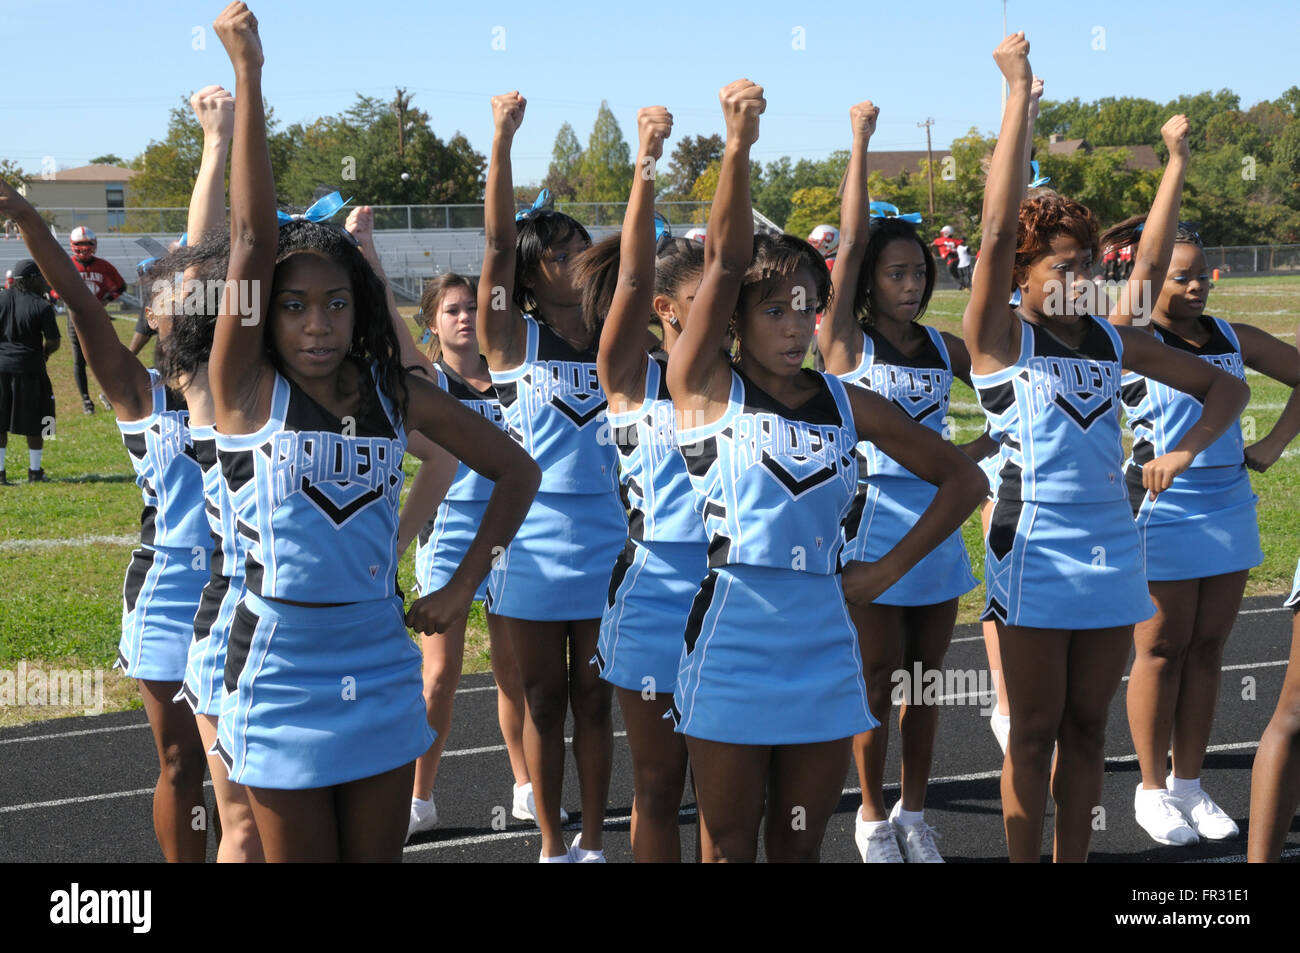 high school cheerleaders at a football game Stock Photo